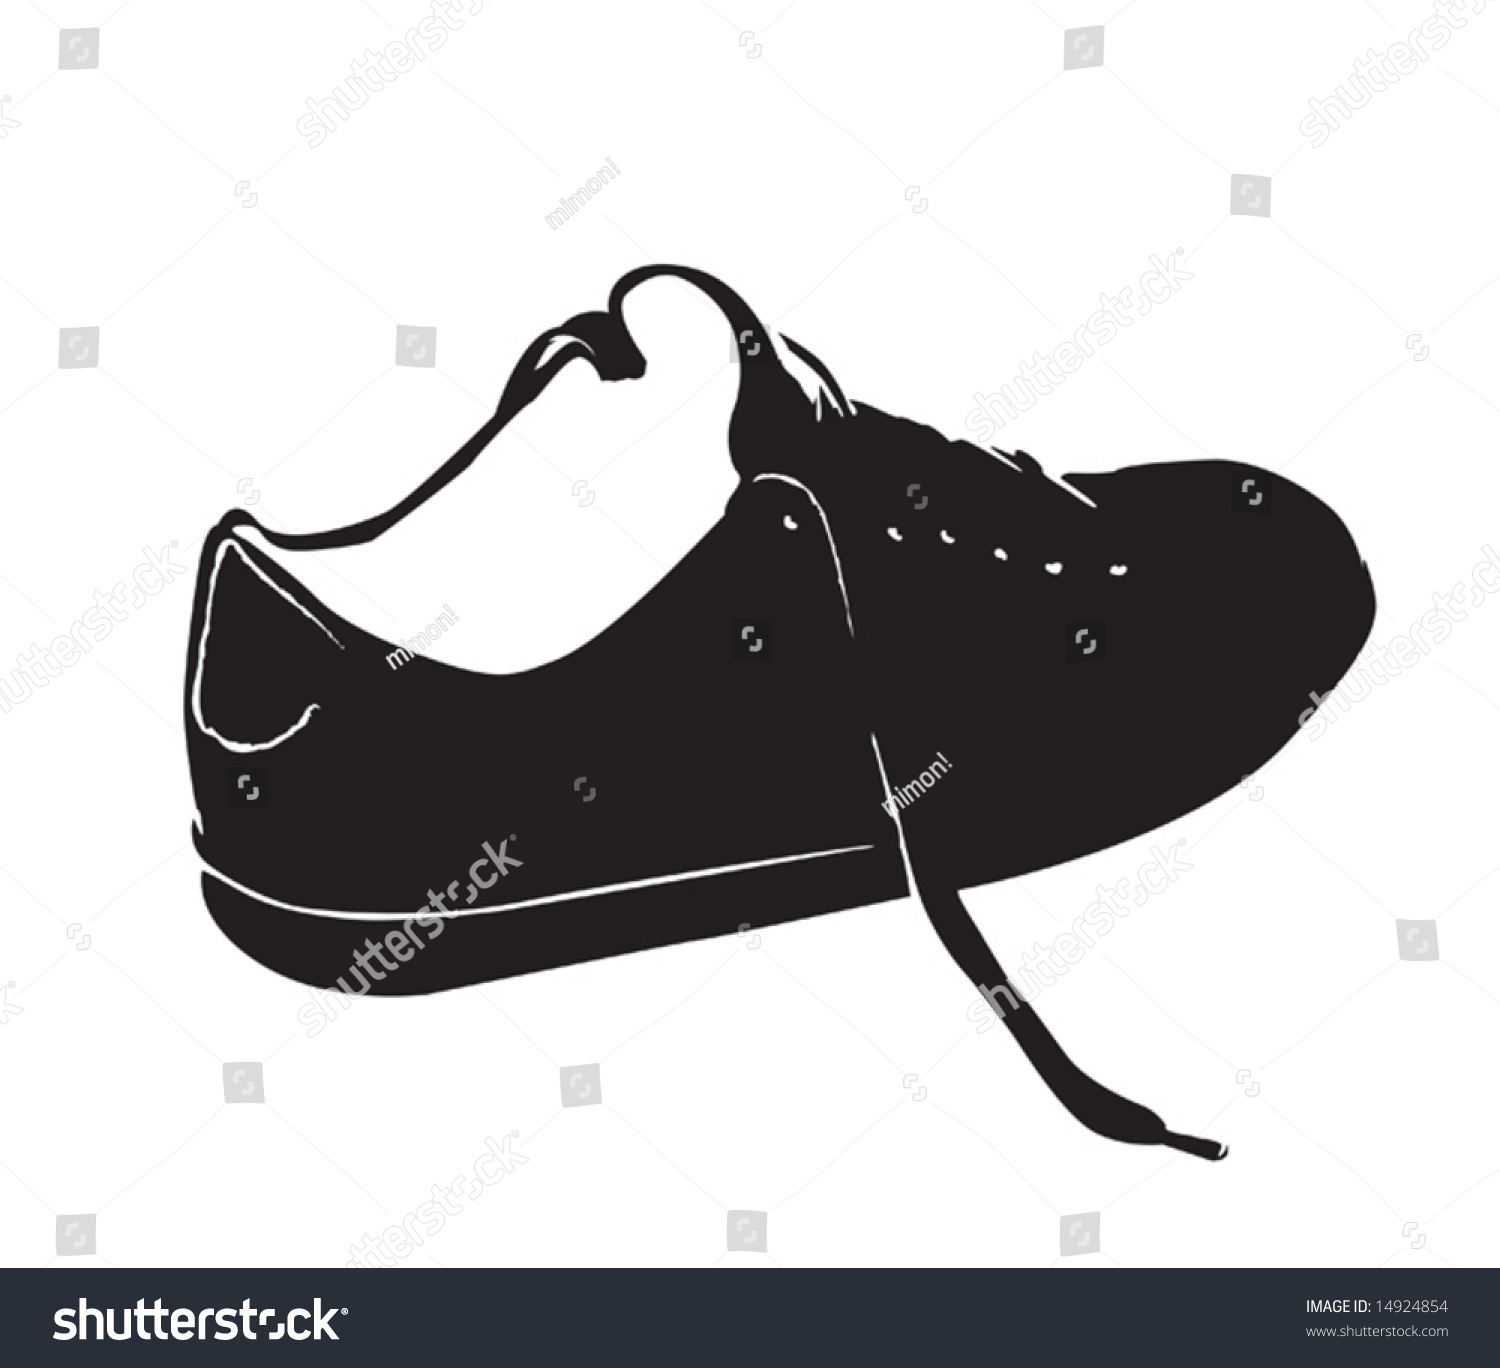 Shoe Stencil (Vector) - 14924854 : Shutterstock